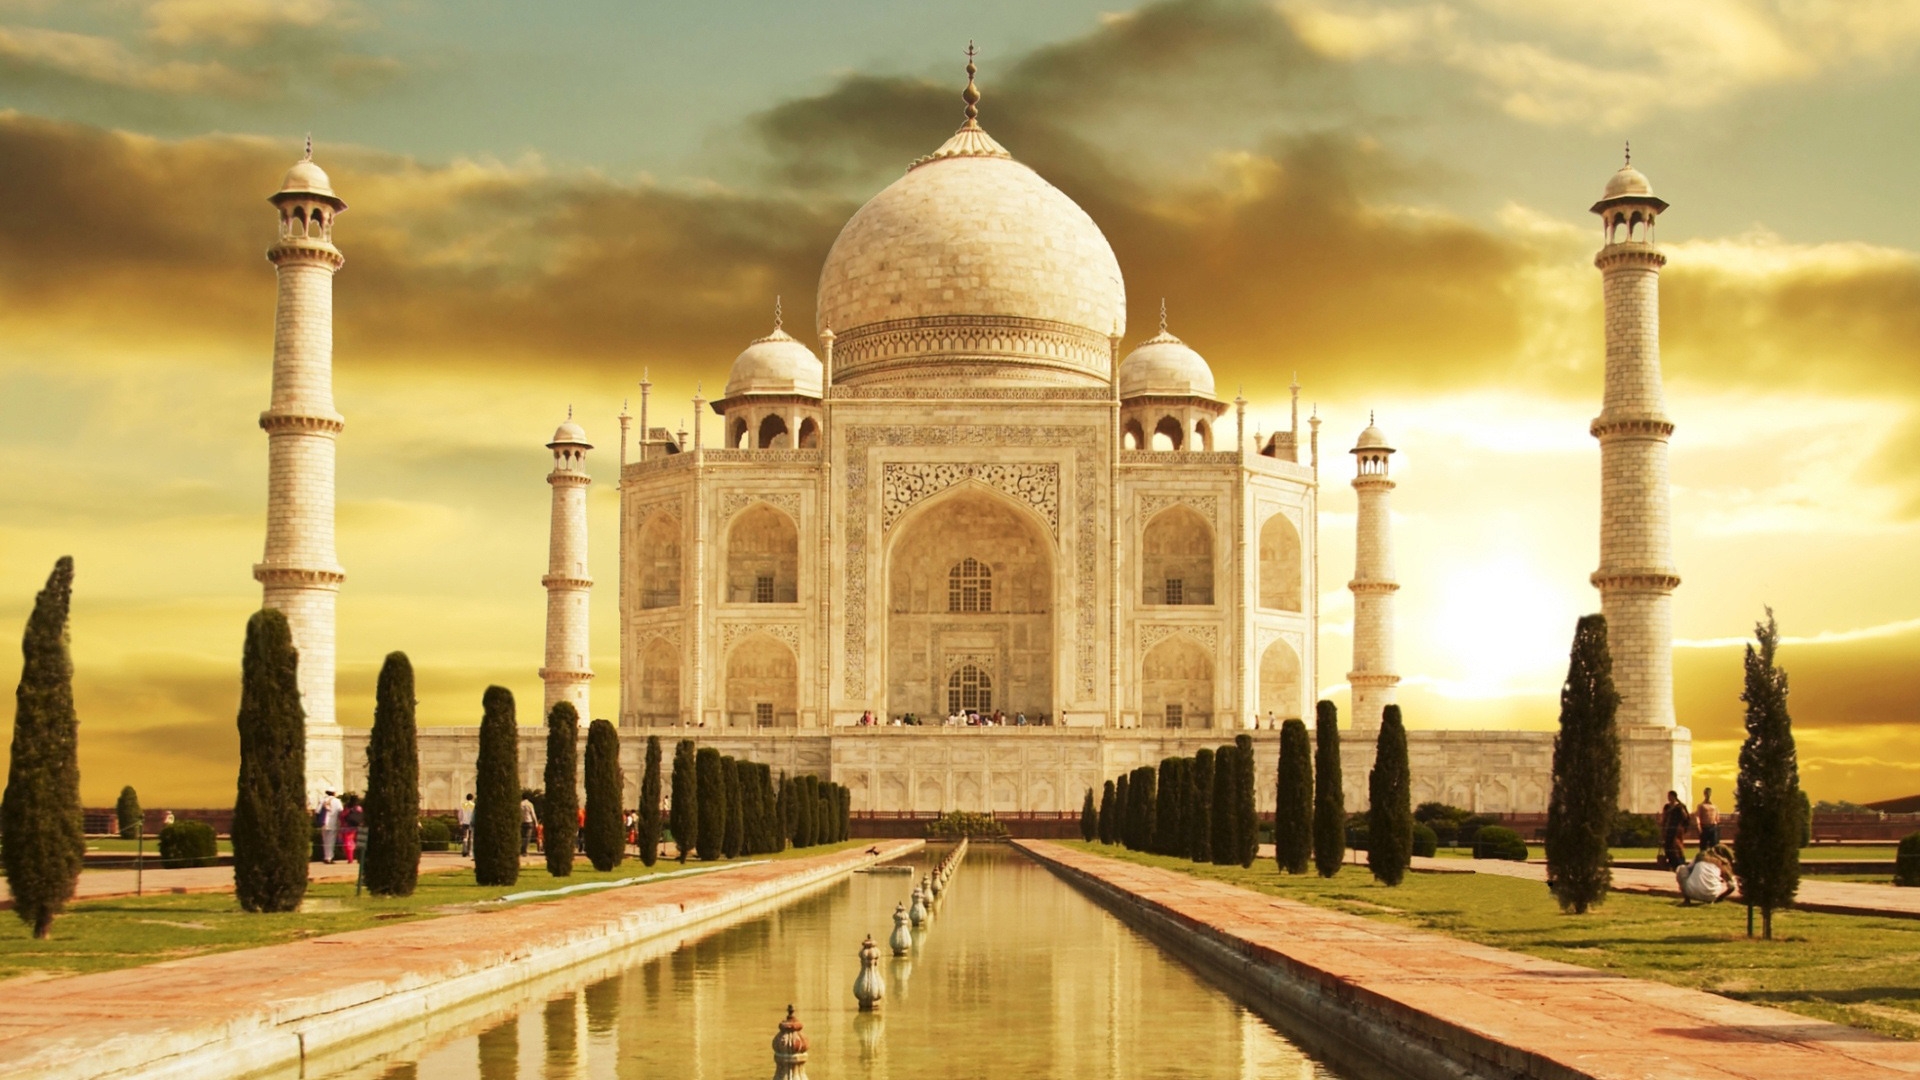 Taj Mahal India for 1920 x 1080 HDTV 1080p resolution